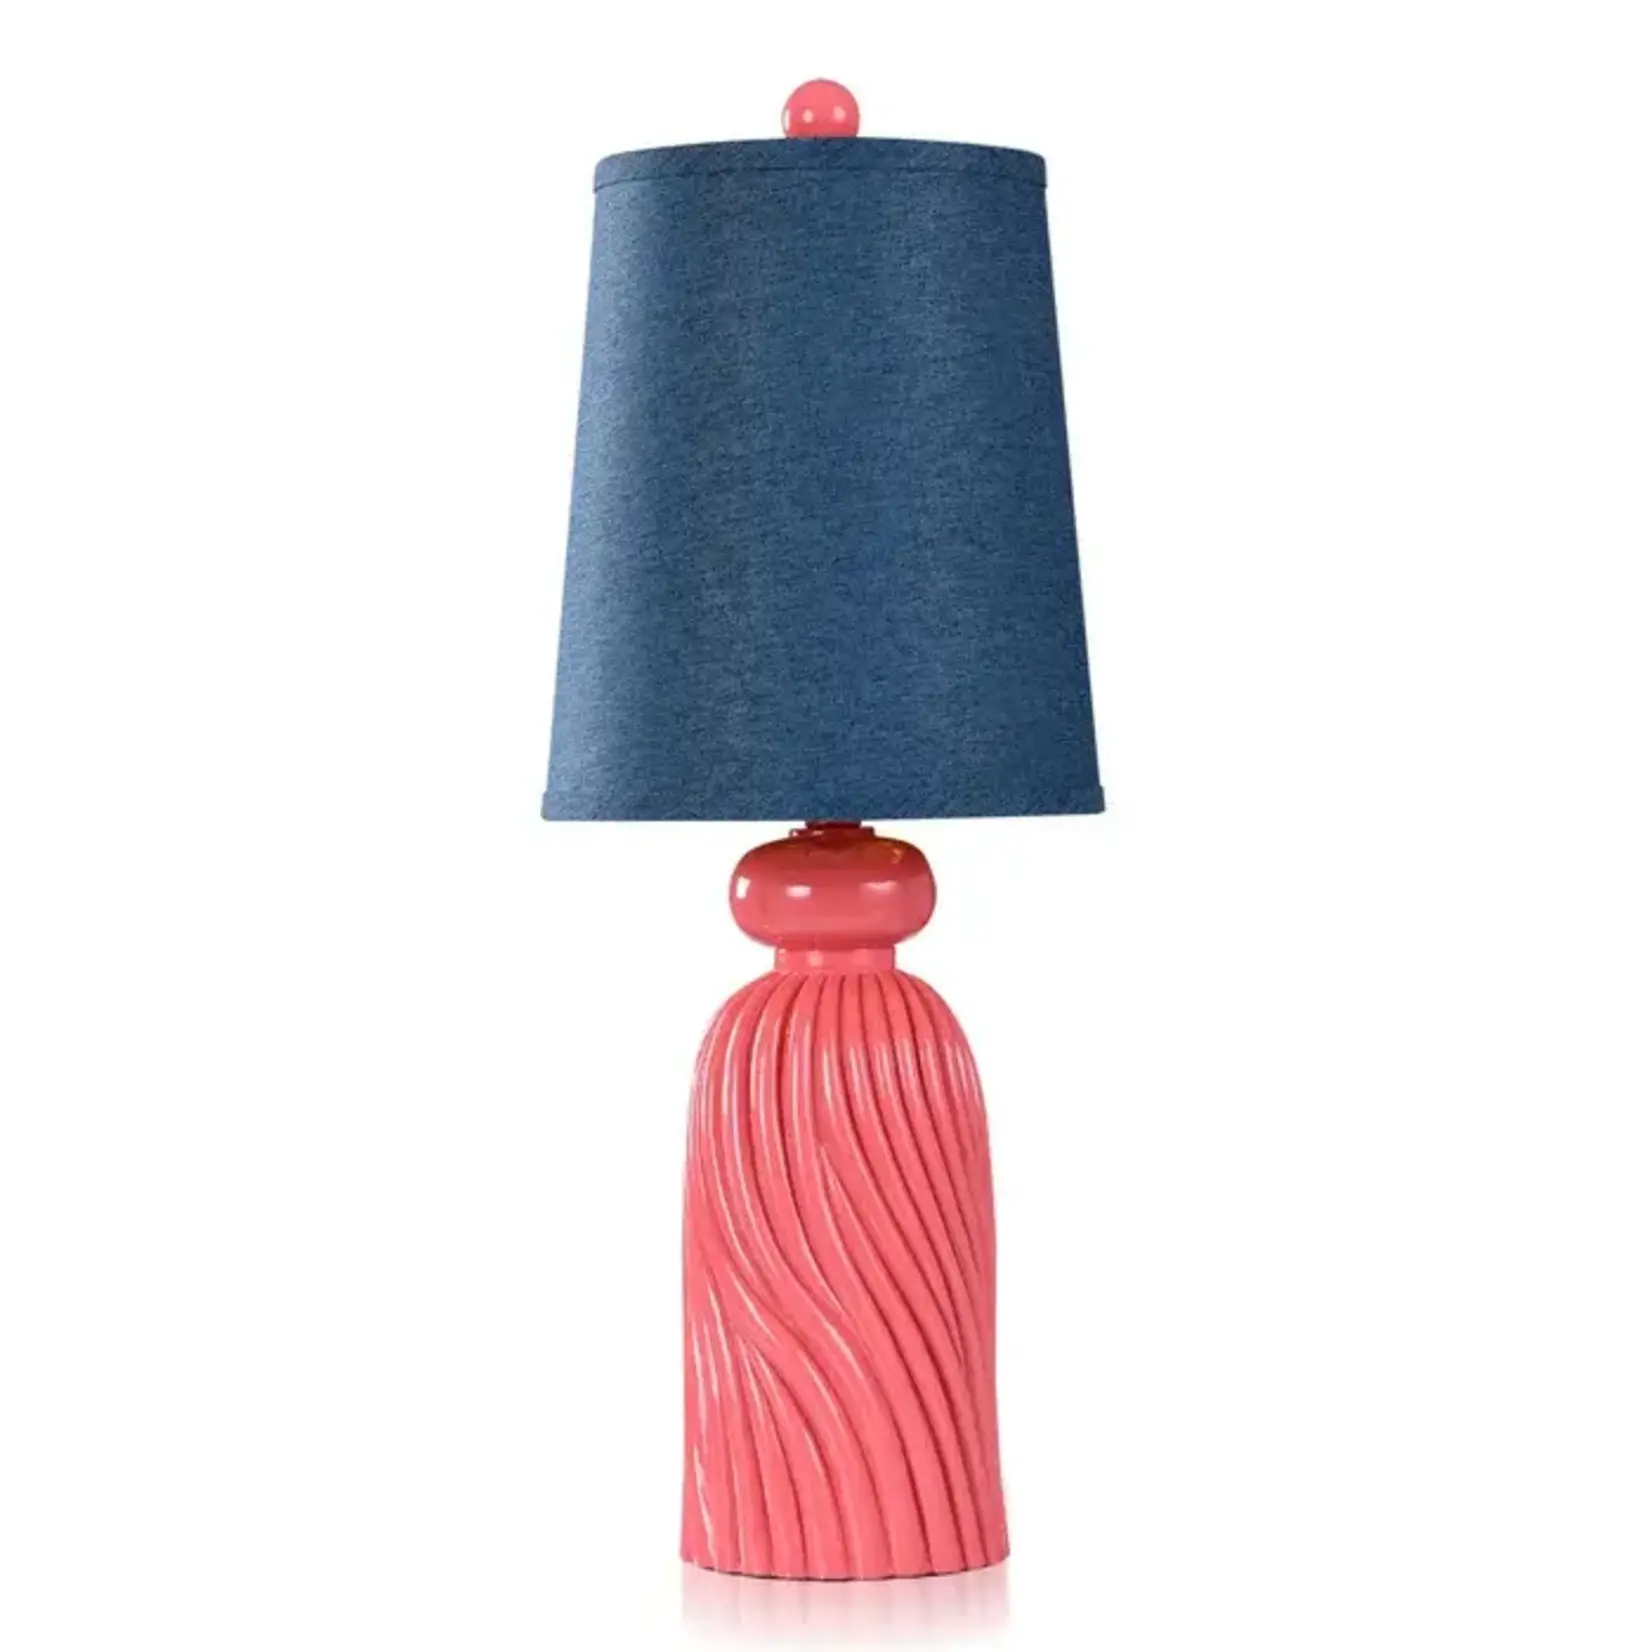 Stylecraft Coral Lamp